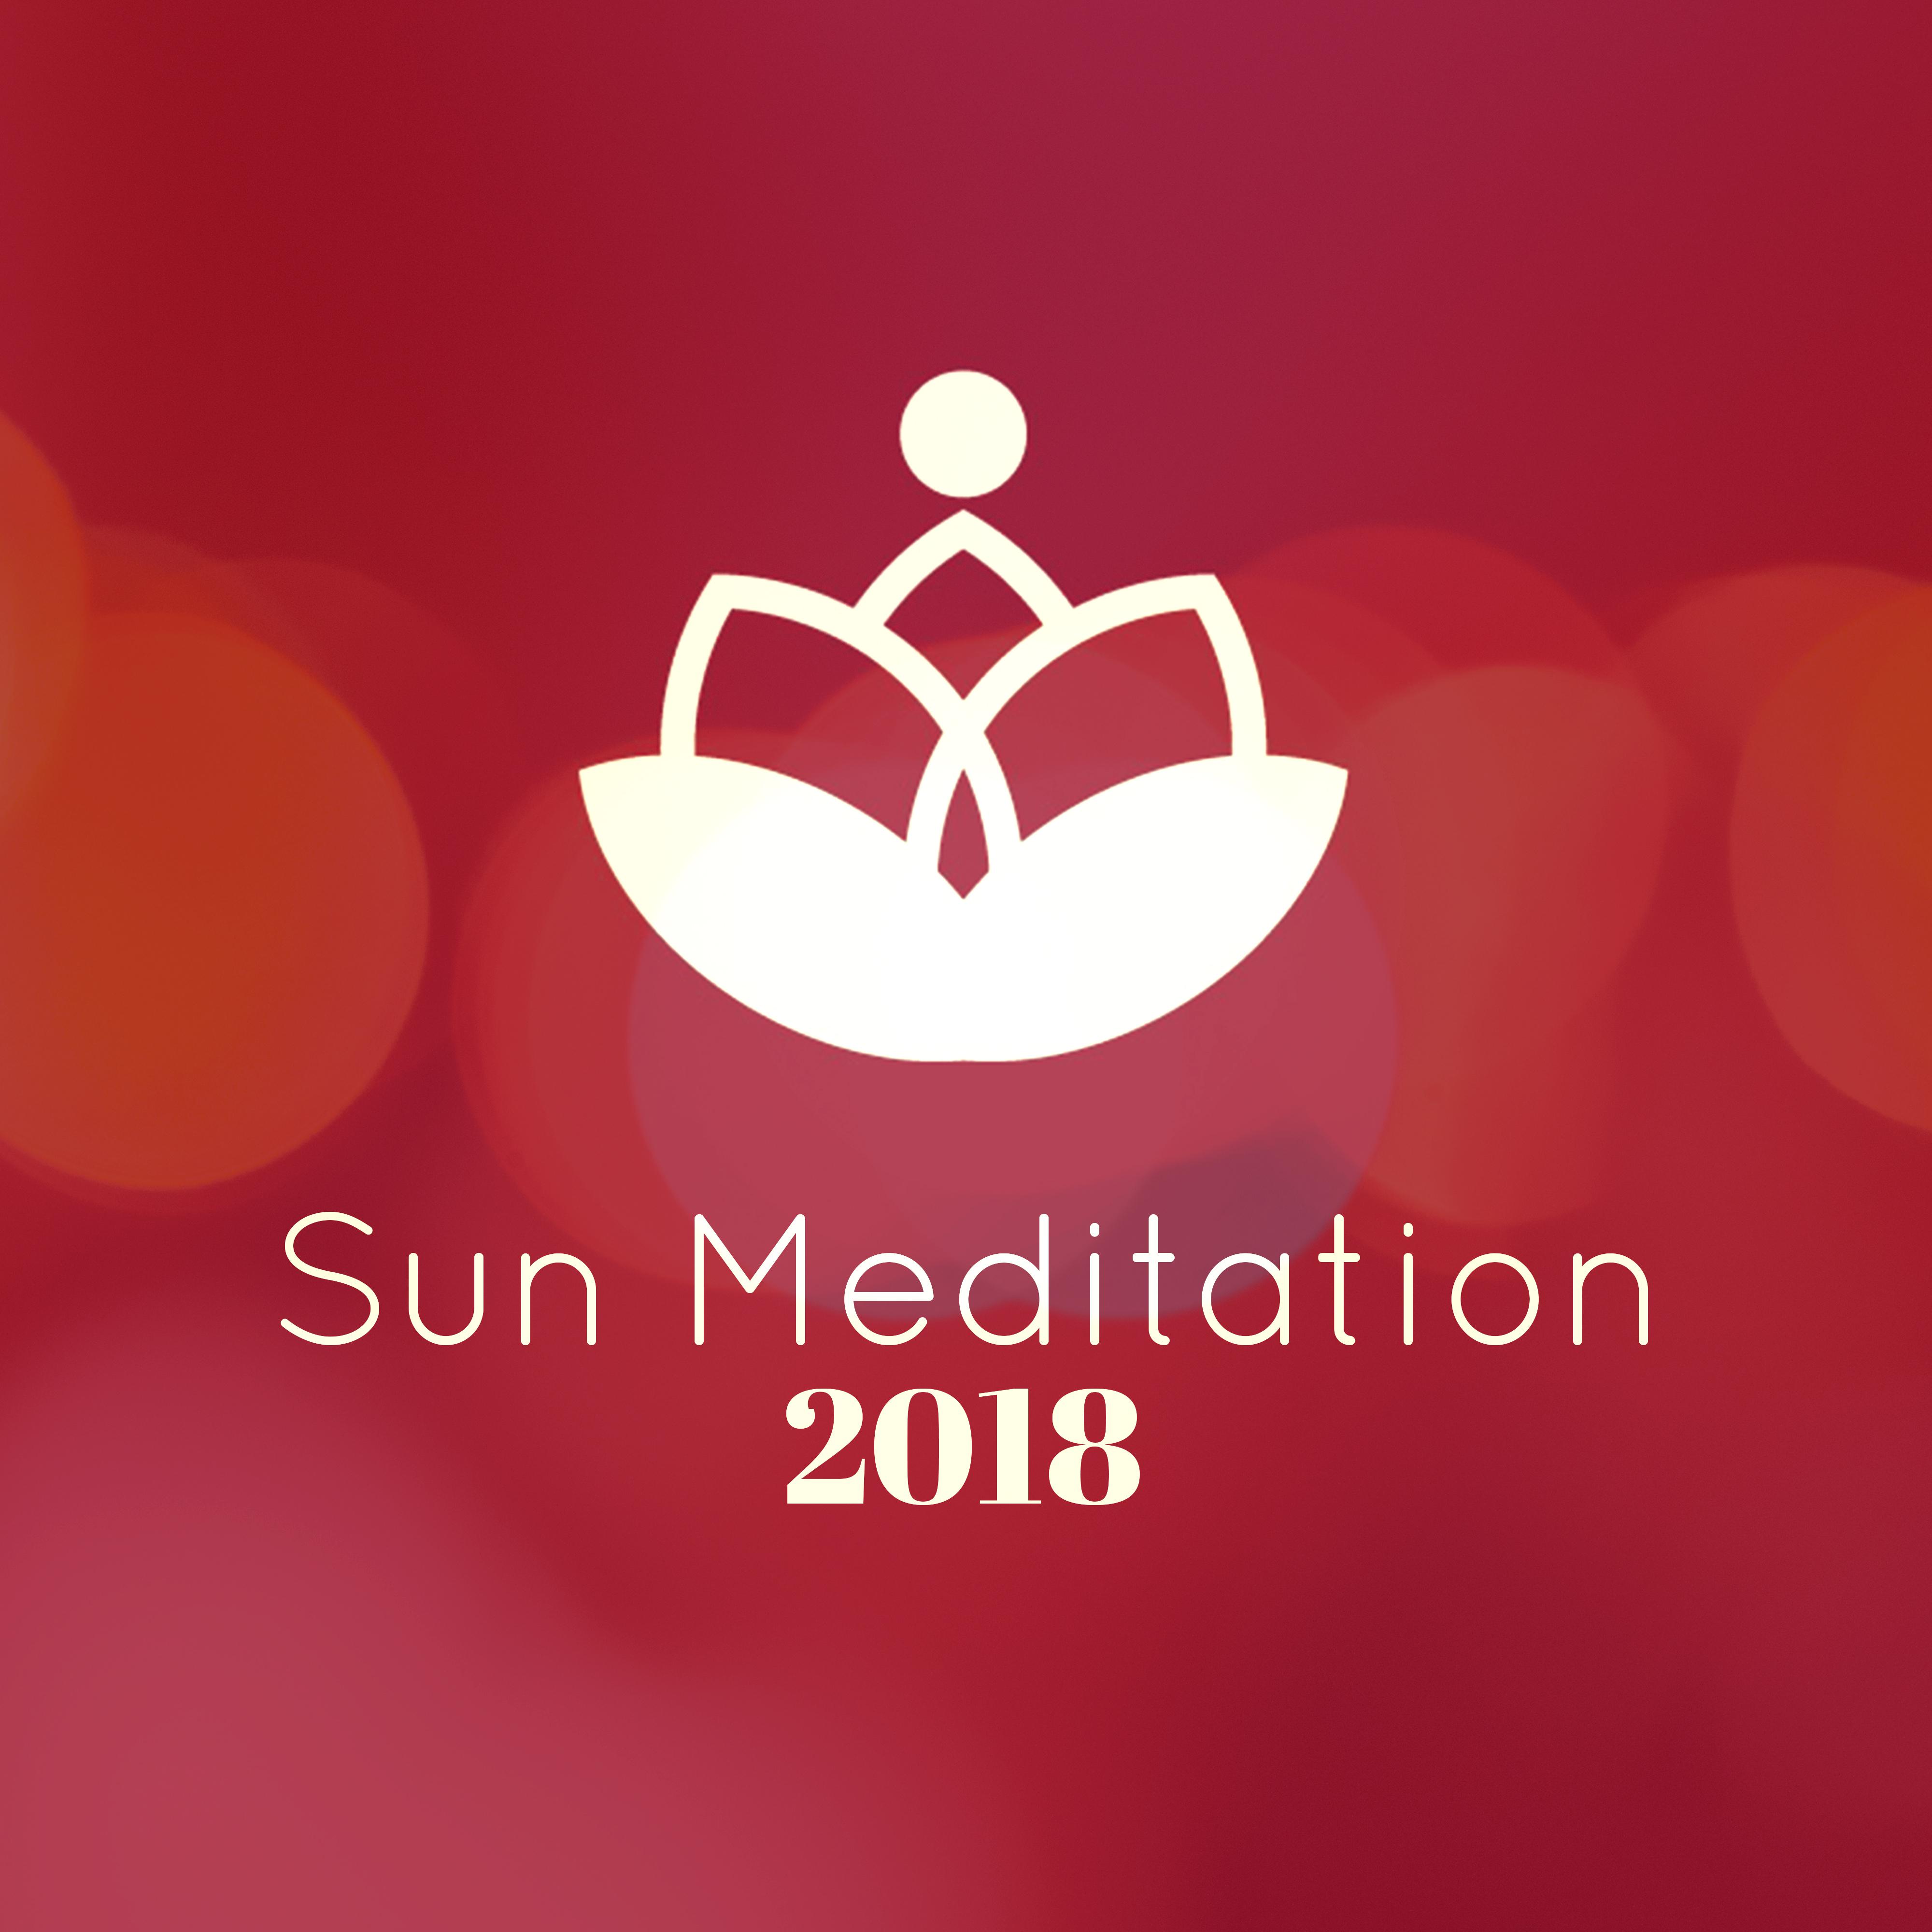 Sun Meditation 2018